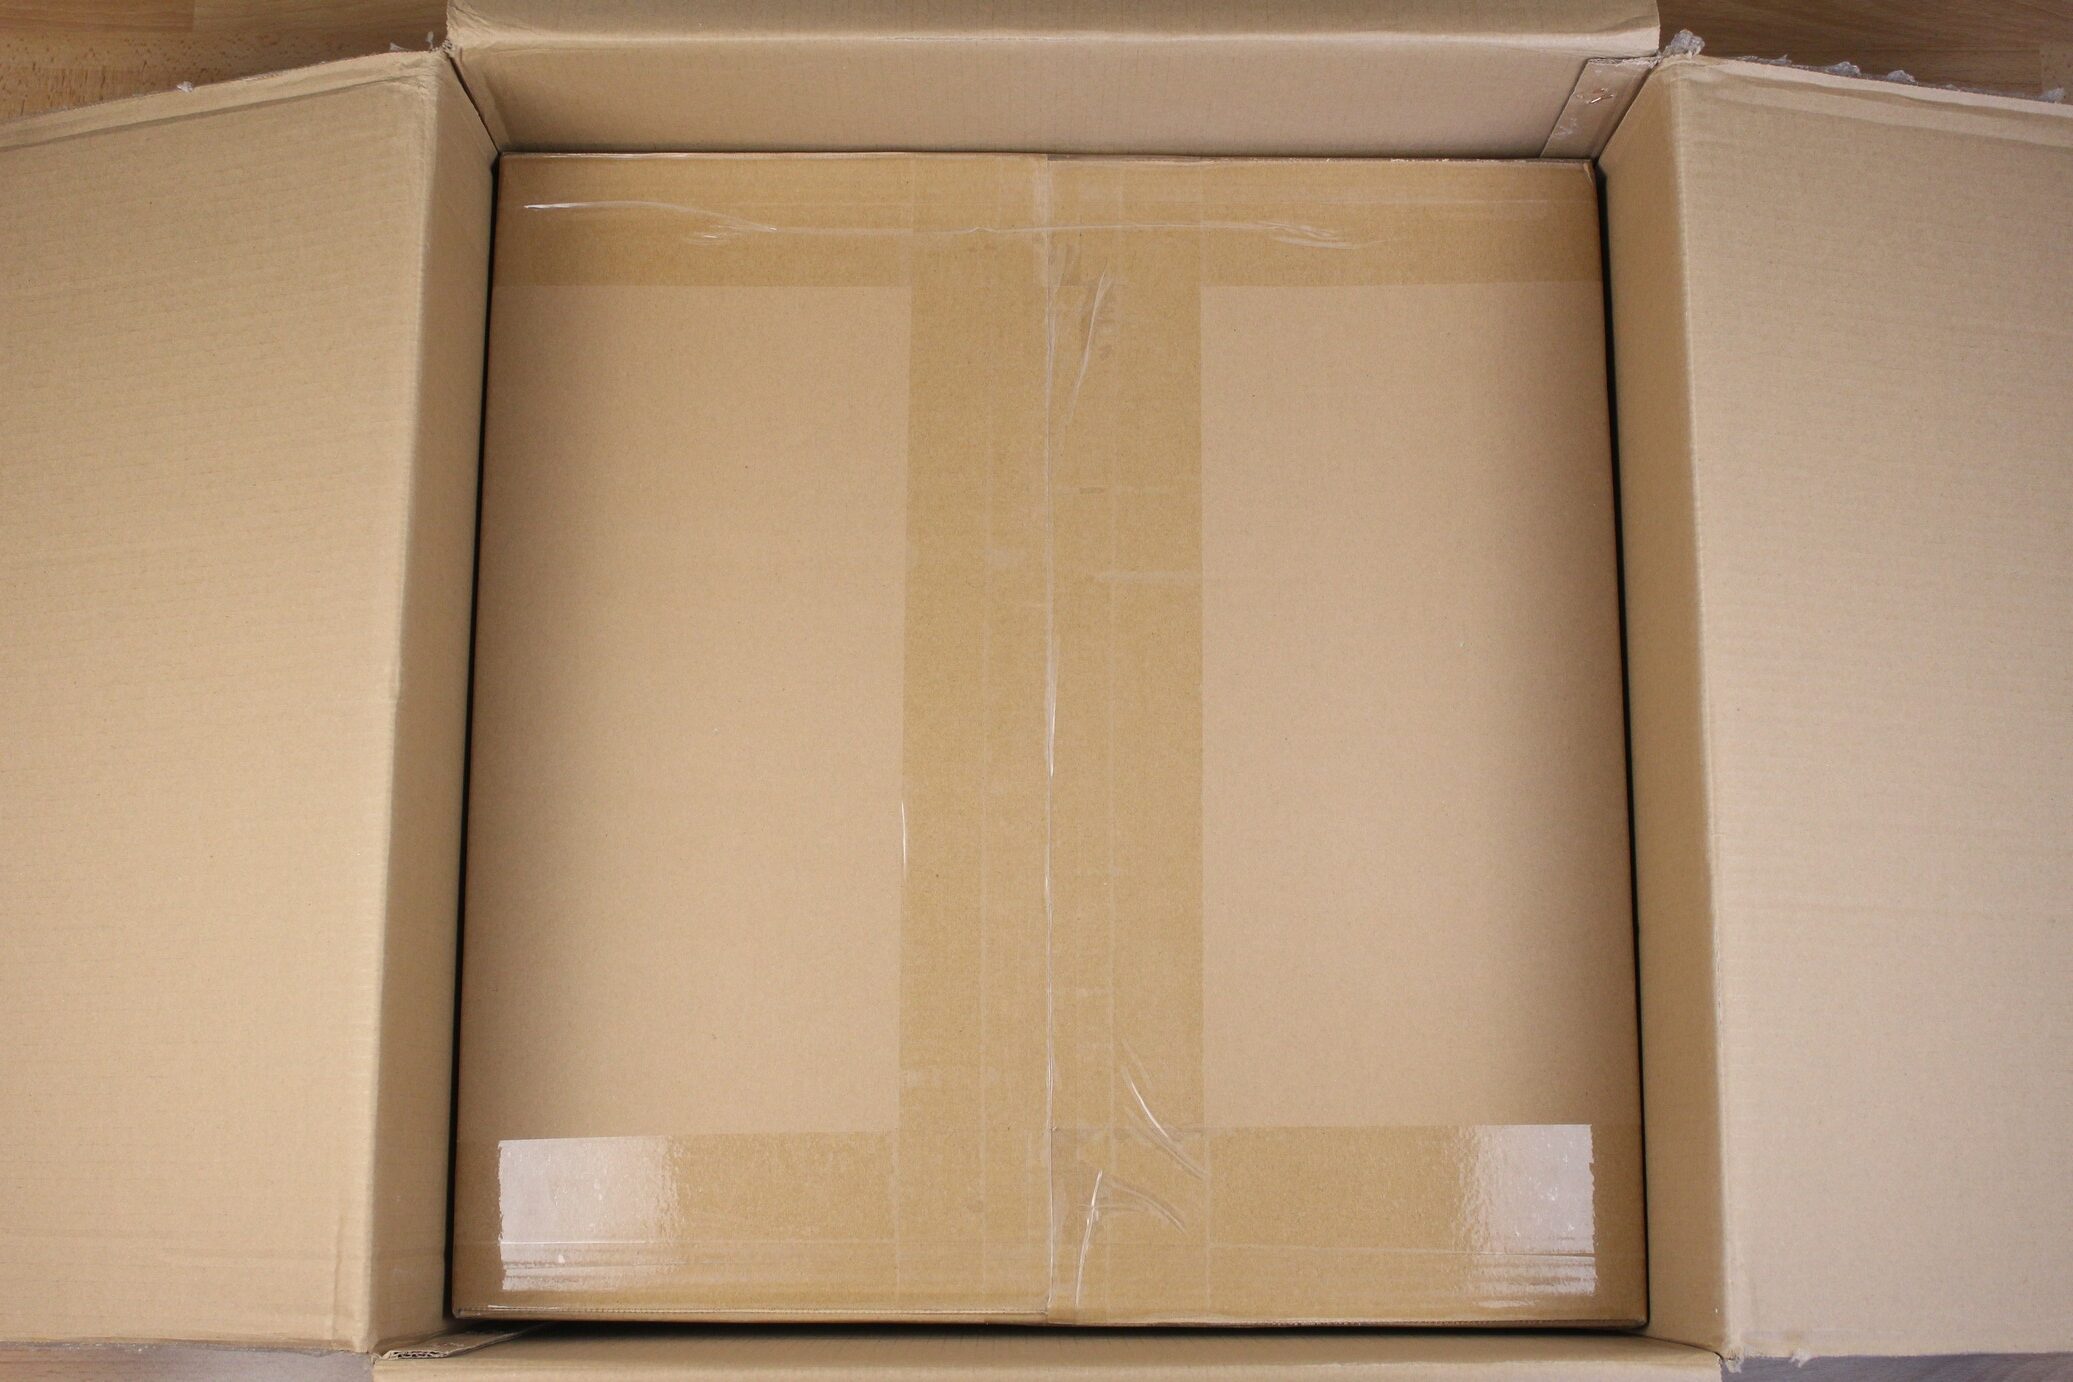 FYSETC Voron Trident Kit Review Packaging 6 rotated | VORON Trident FYSETC Kit Review: Is it worth it?